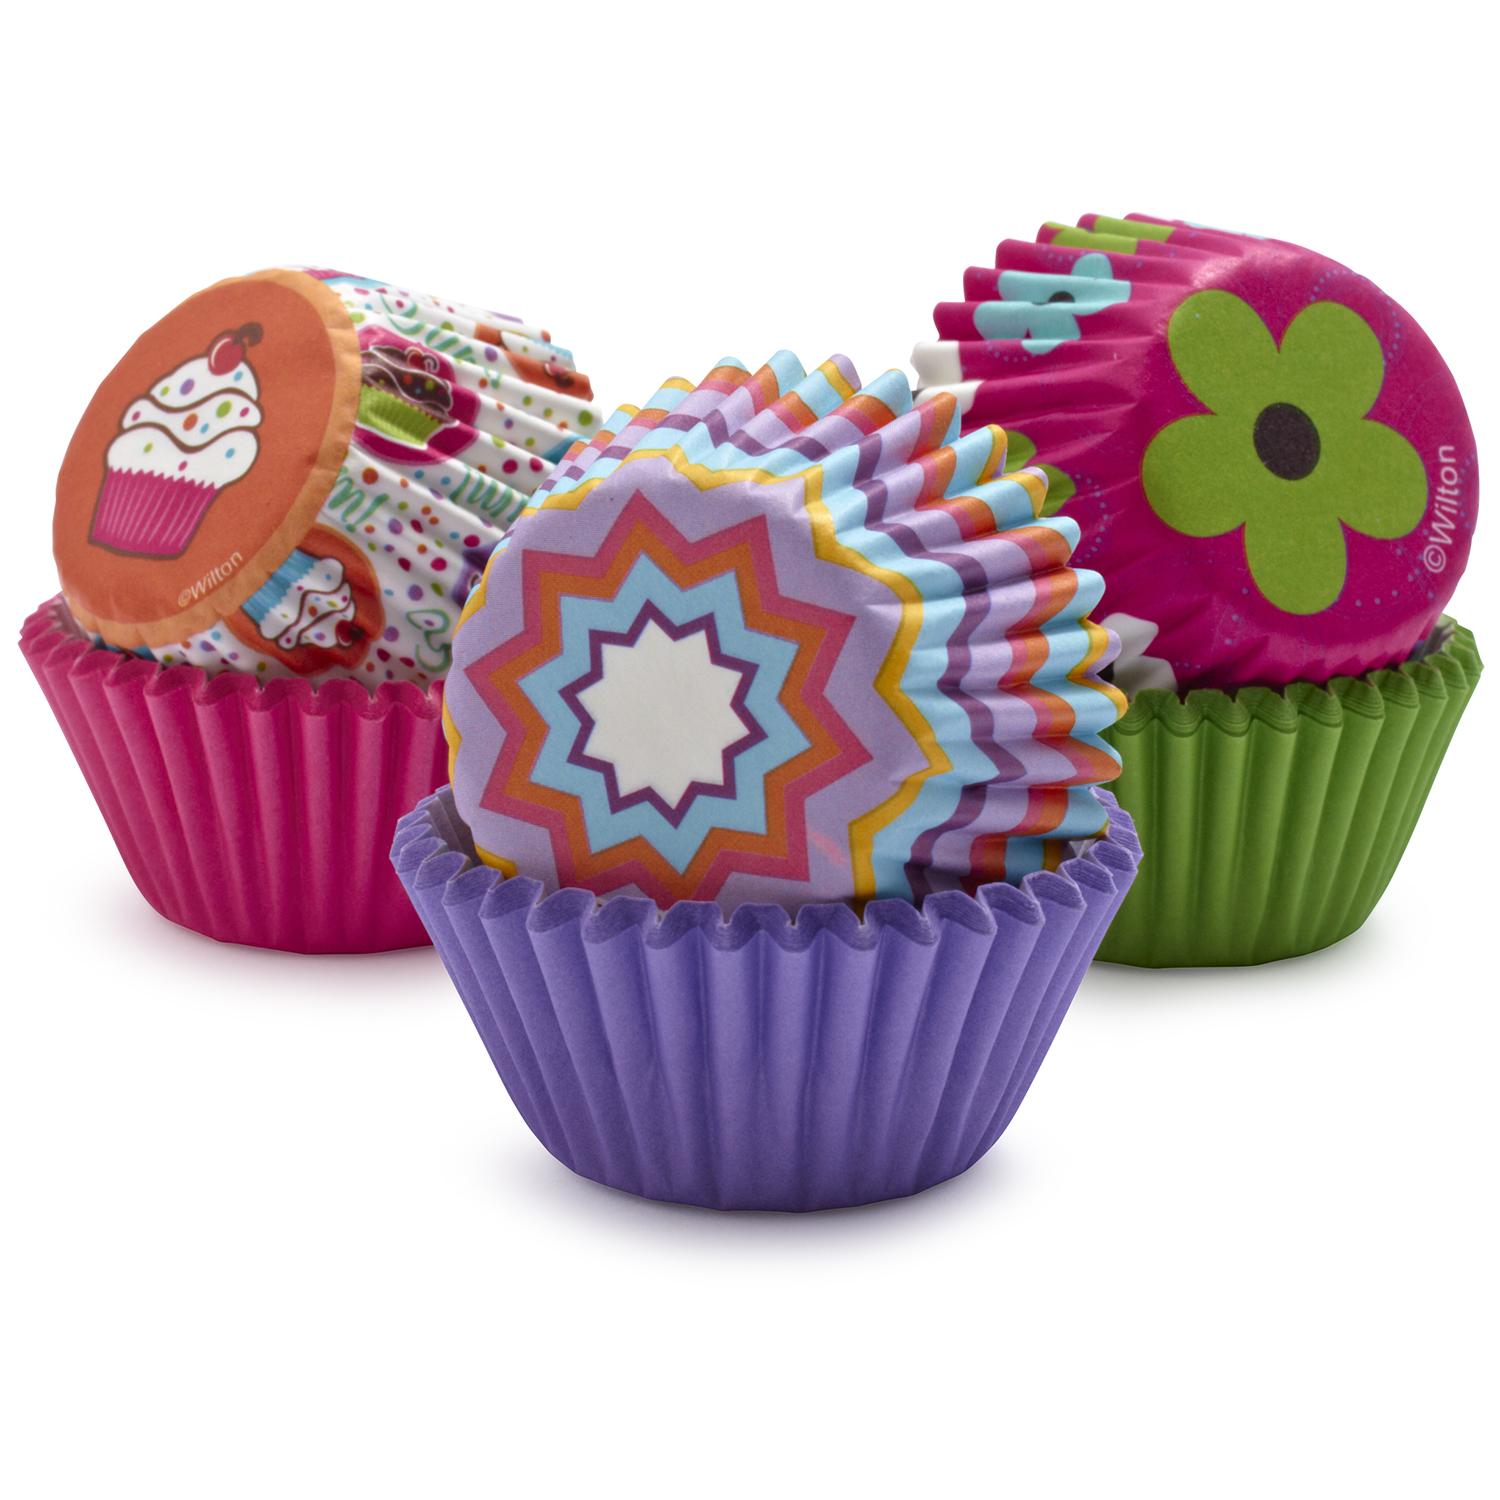 Pink Party Miniaure Bake Cups,Cupcake Papers,100 ct,Wilton,415-0167,Cupcake